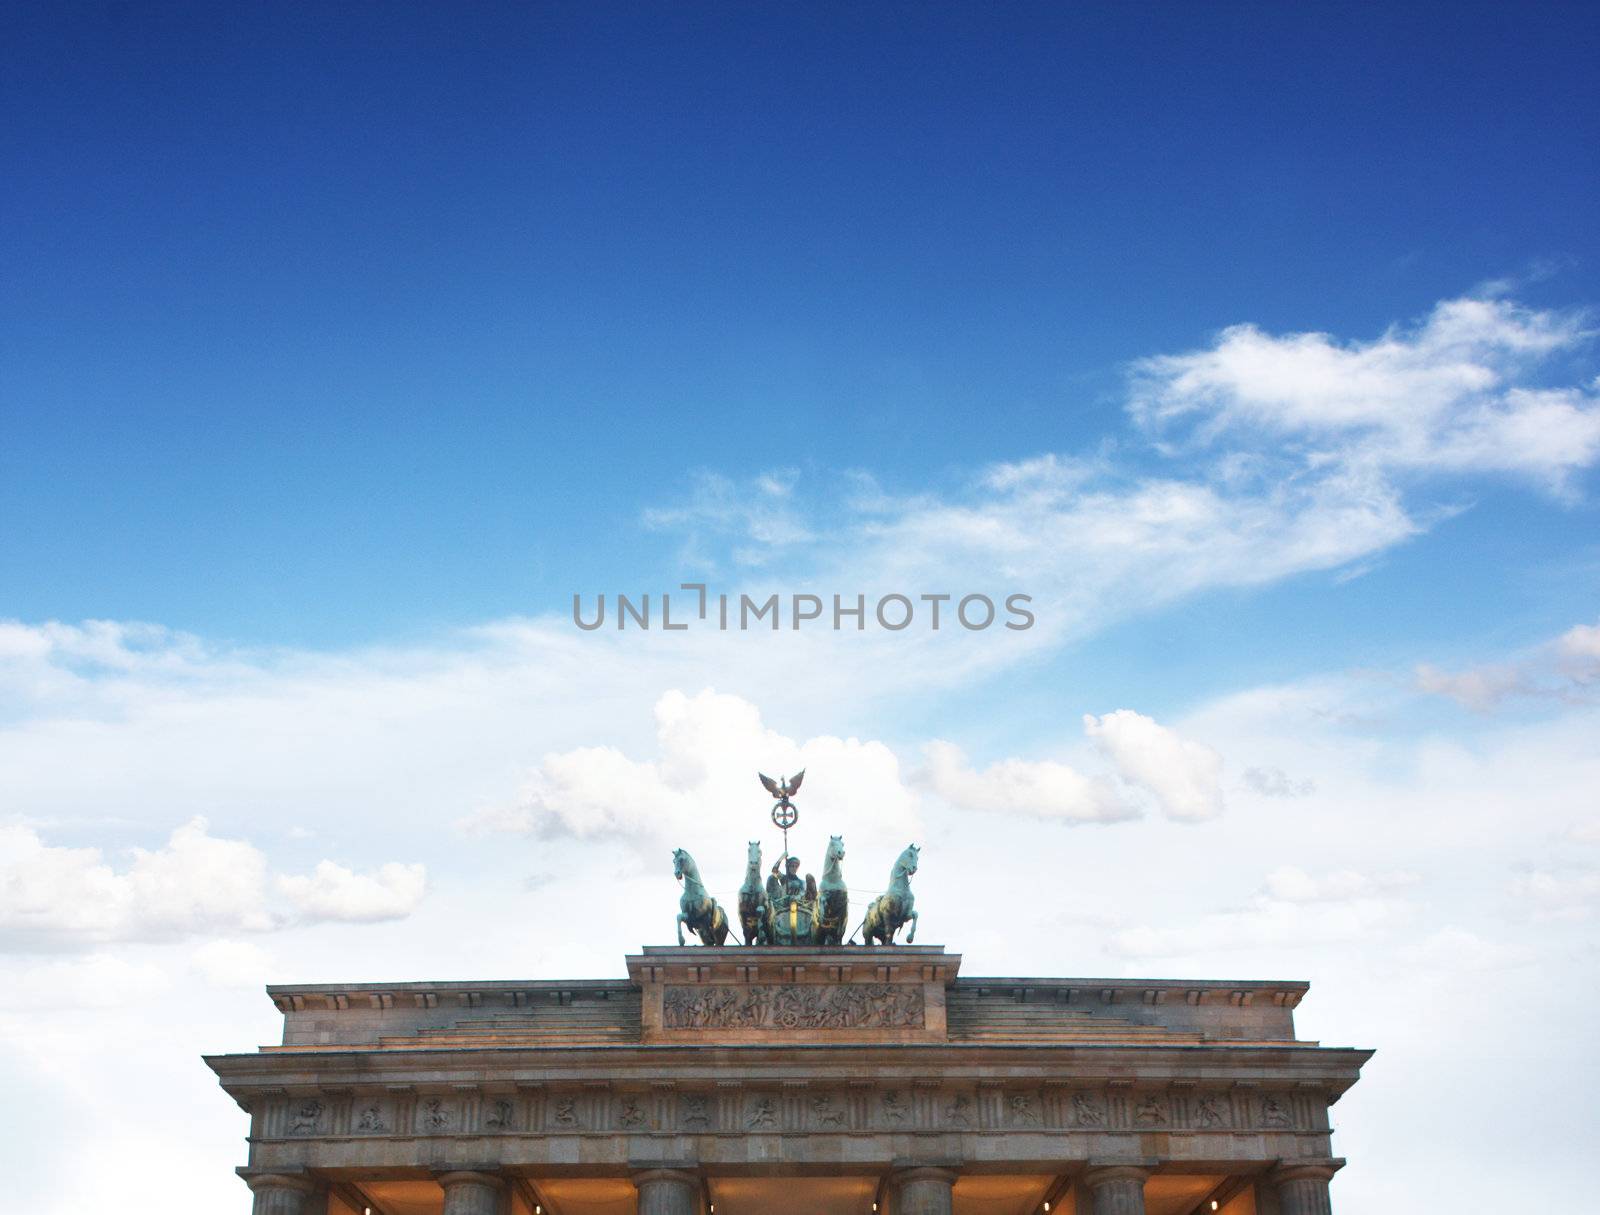 Tourist in Berlin by photochecker